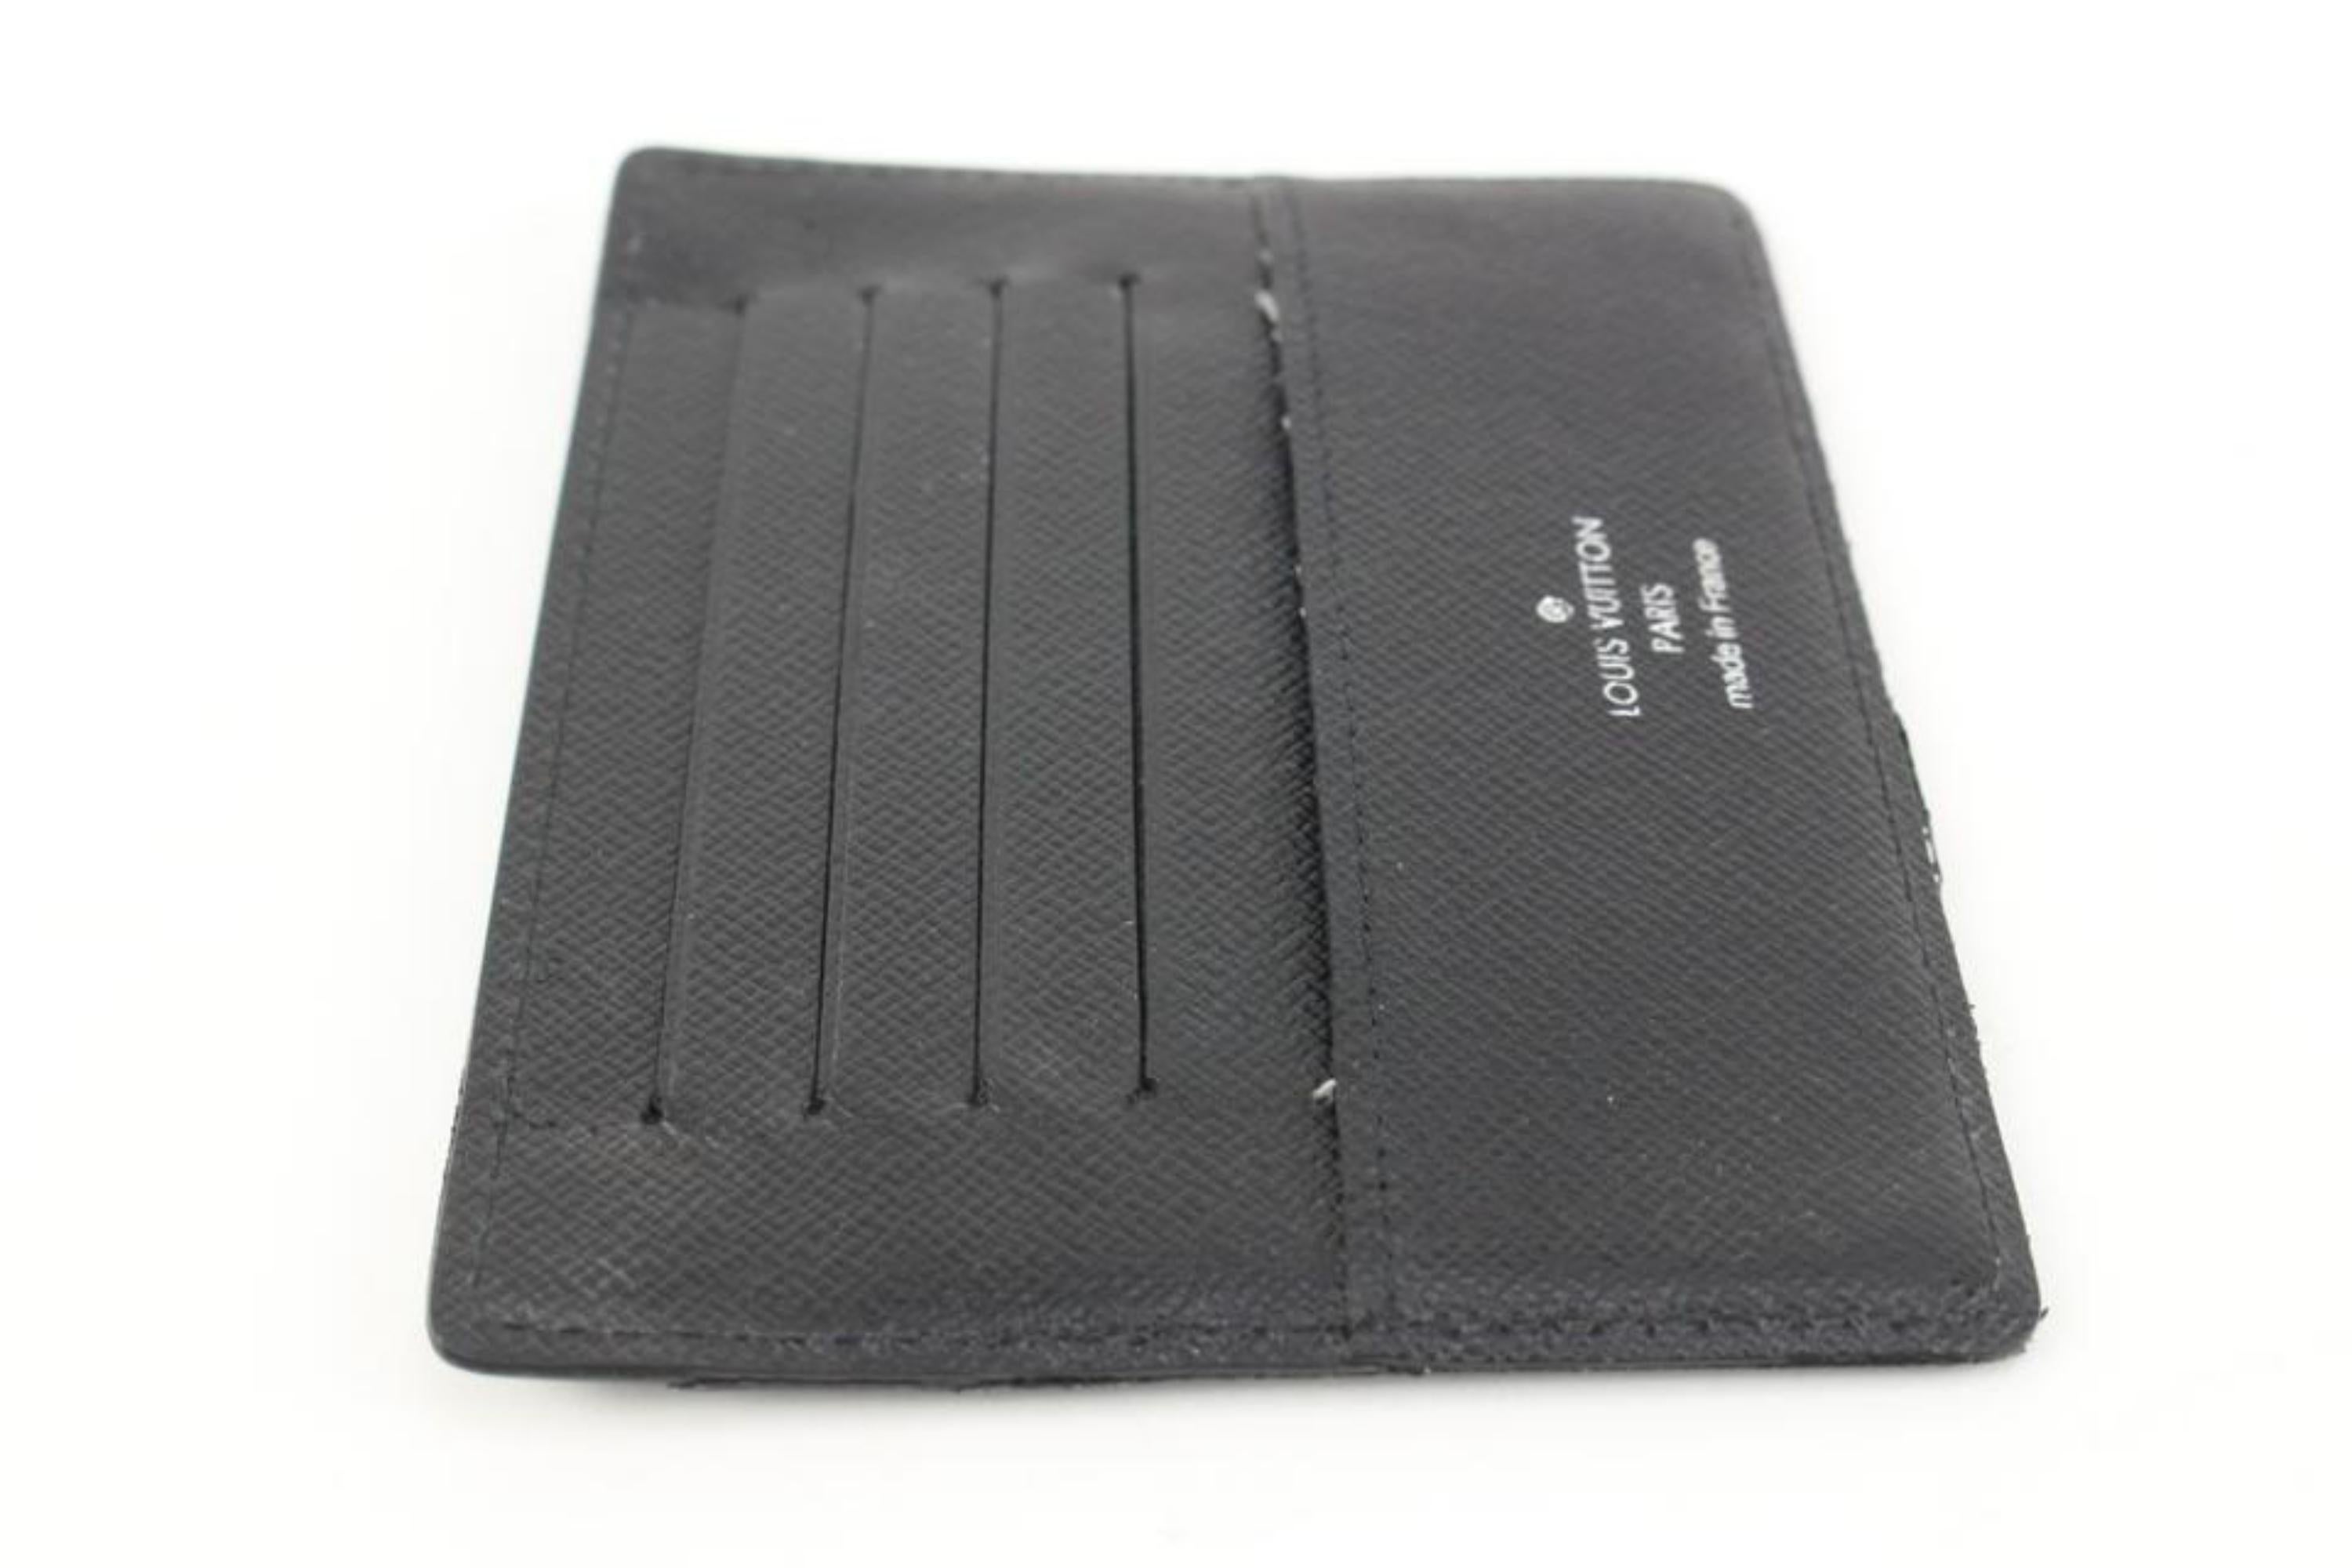 Louis Vuitton Damier Graphite Large Card Holder Wallet Case Insert 25lk413s For Sale 3